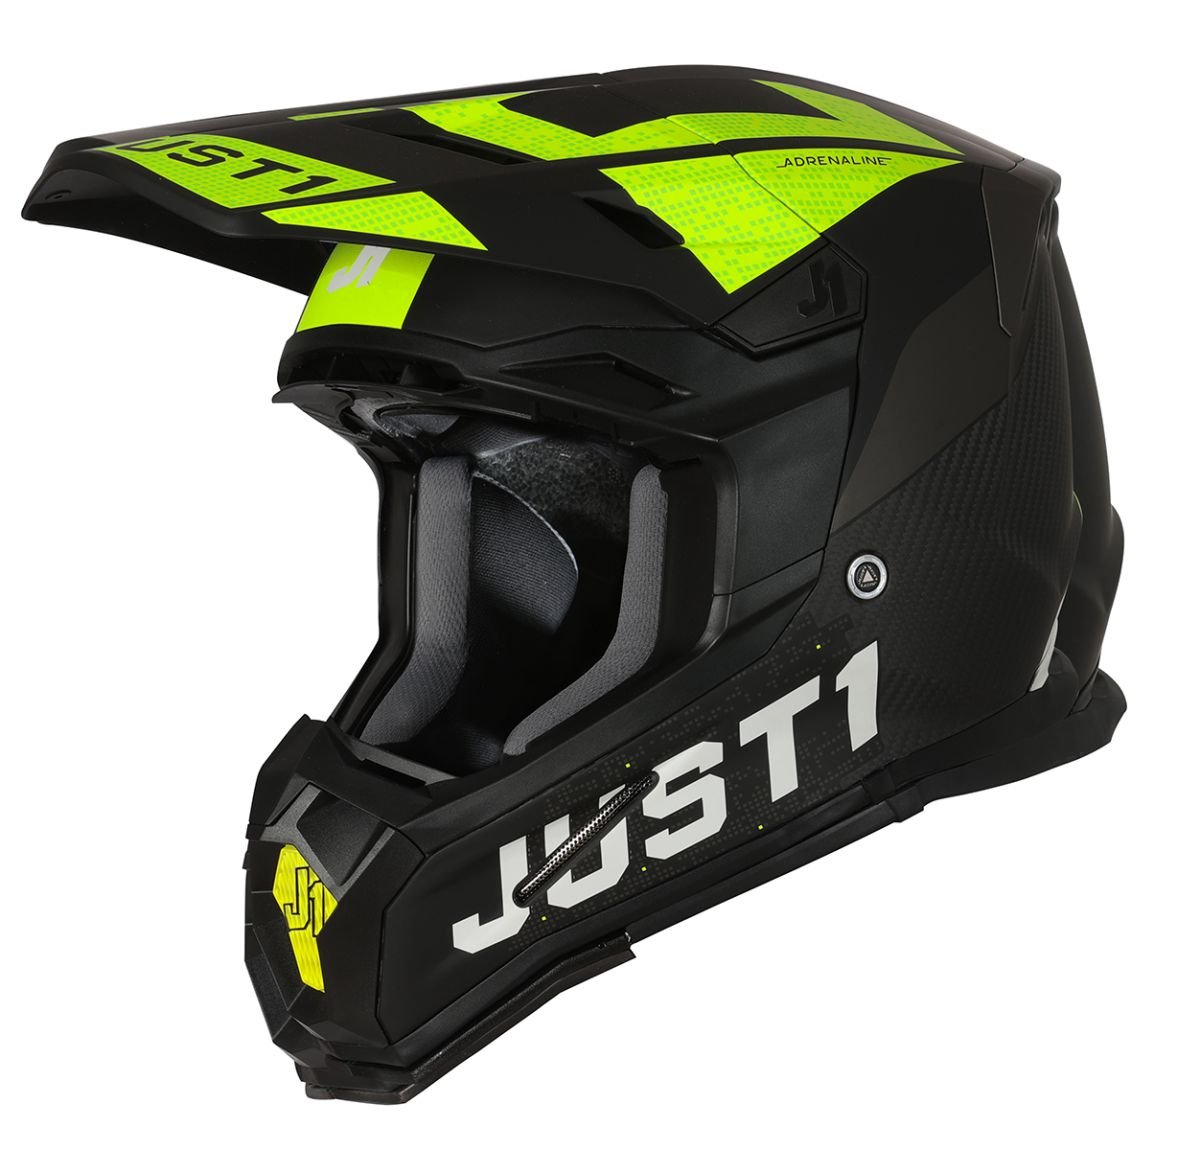 Image of Just1 Helmet J-22 Adrenaline Black Yellow Fluo Carbon Matt Offroad Helmet Talla L